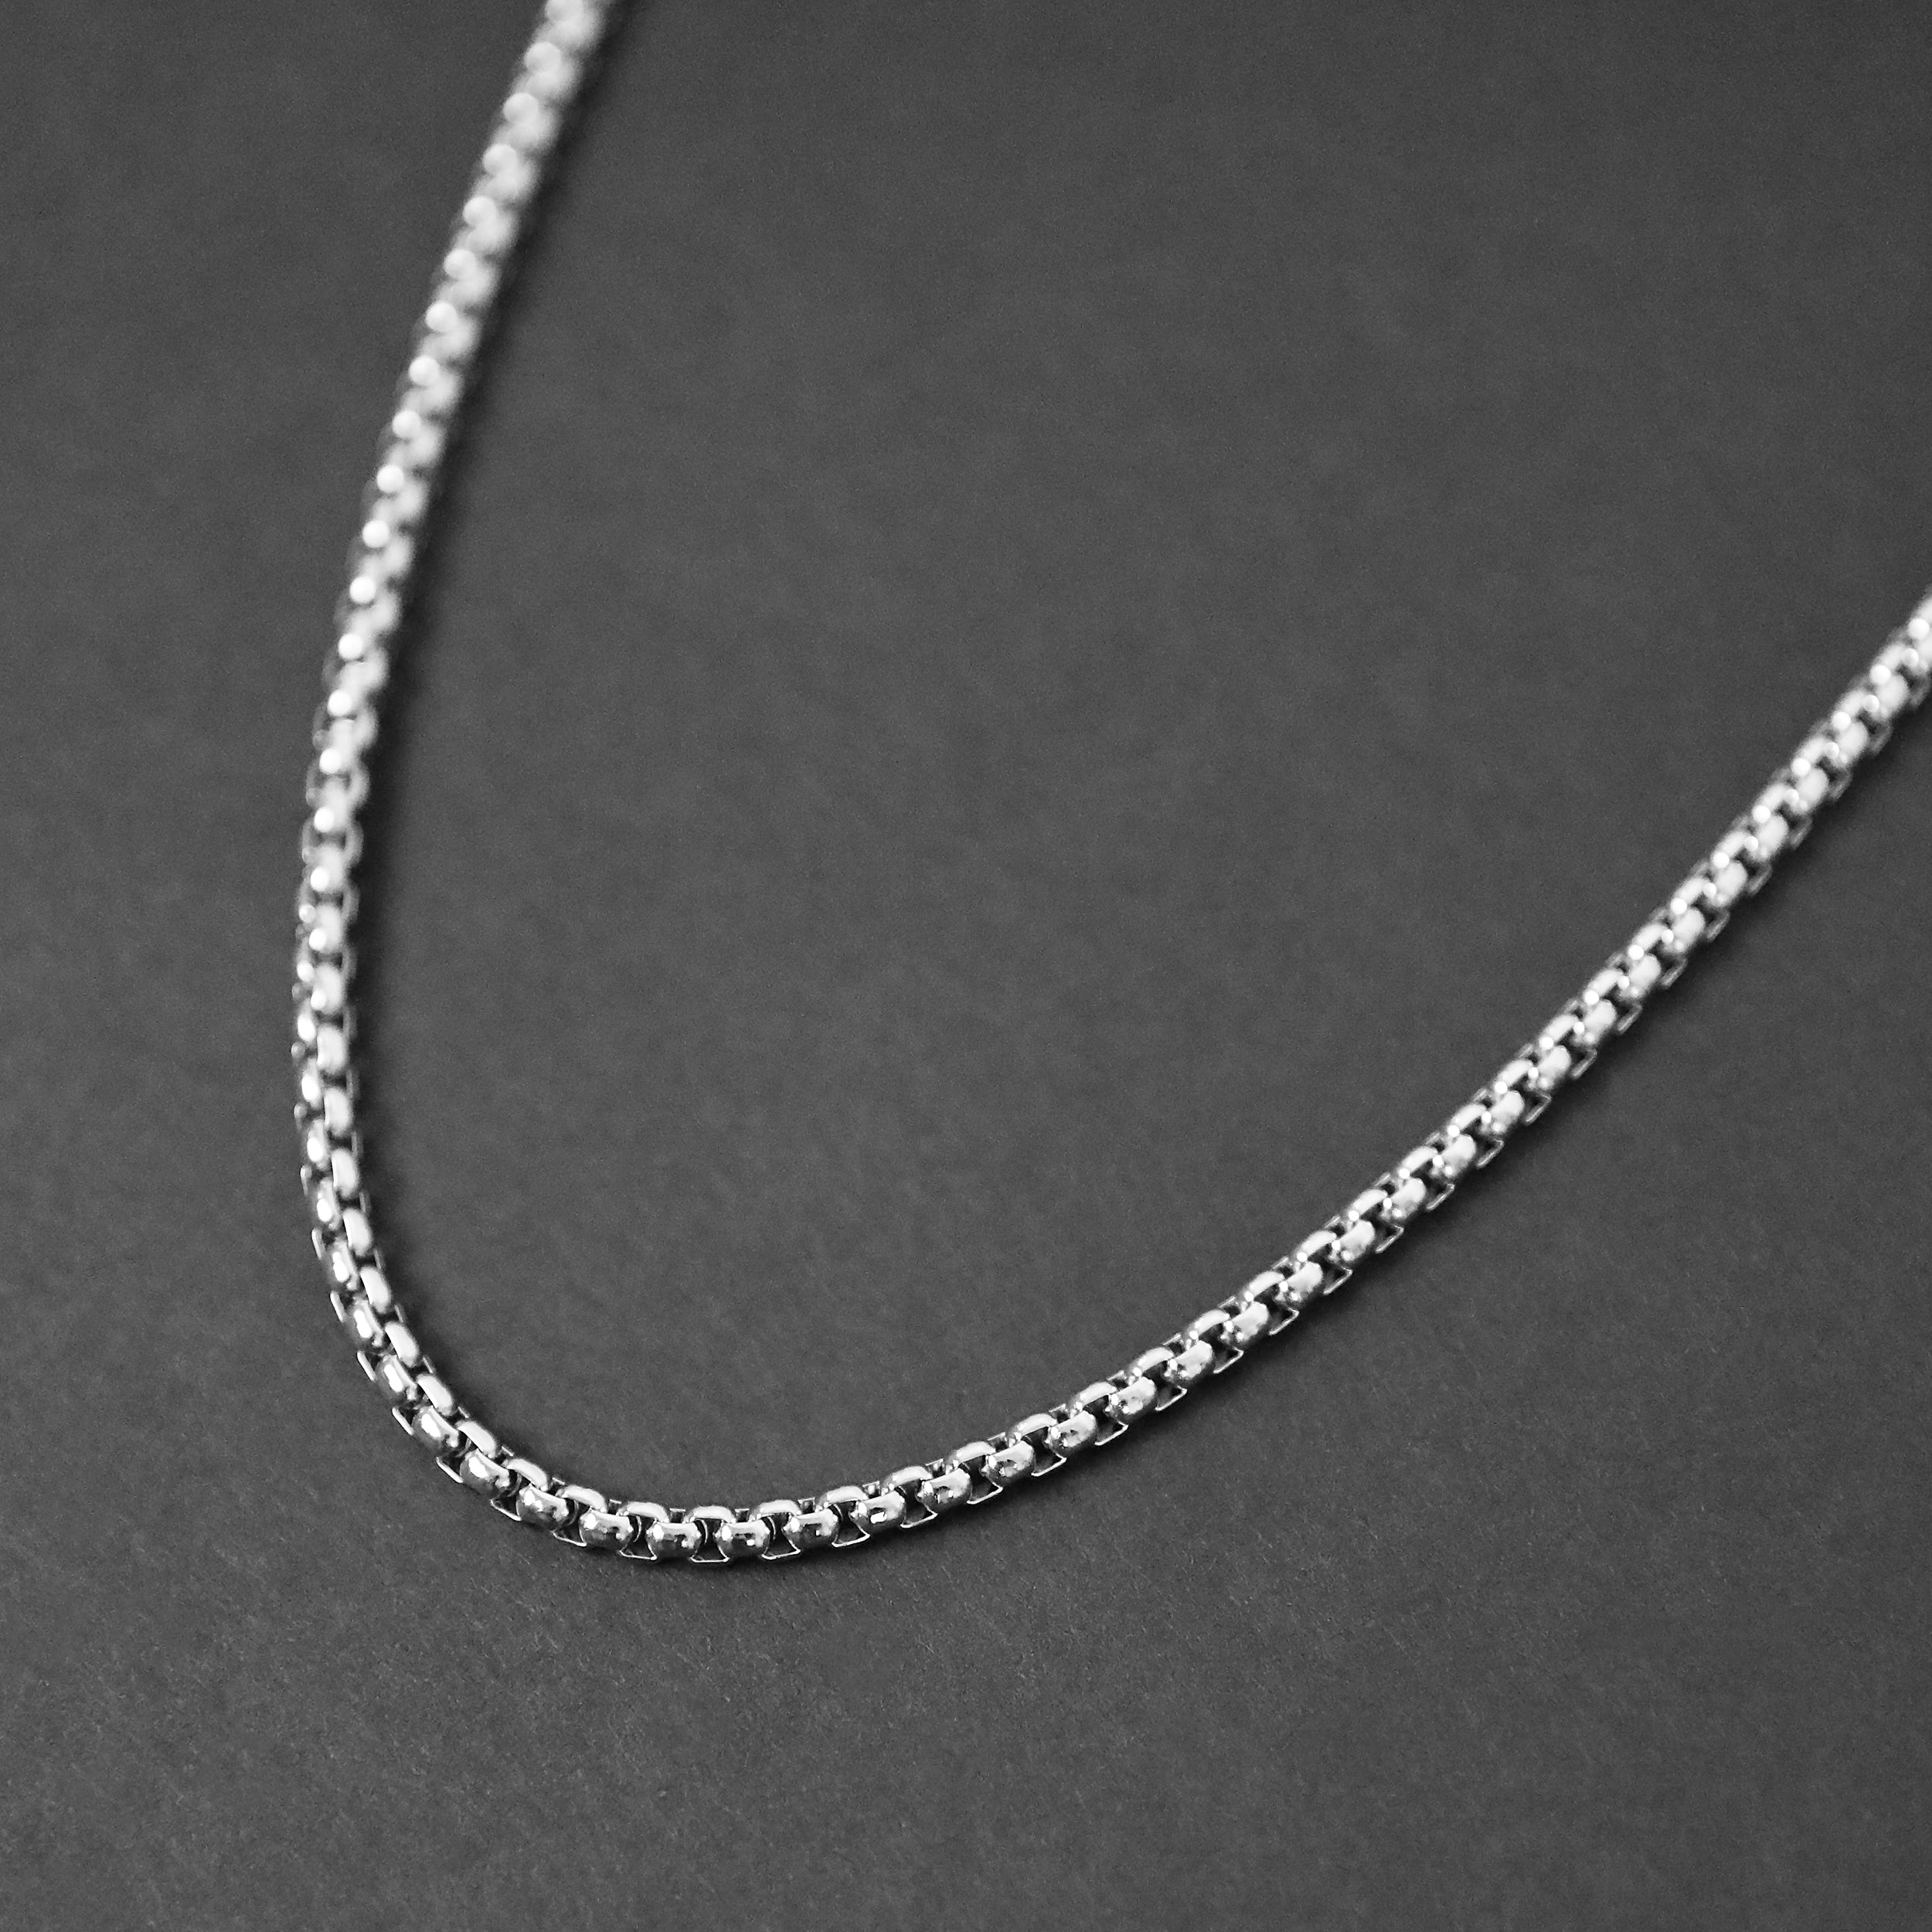 Box Chain Necklace - Silver 4mm